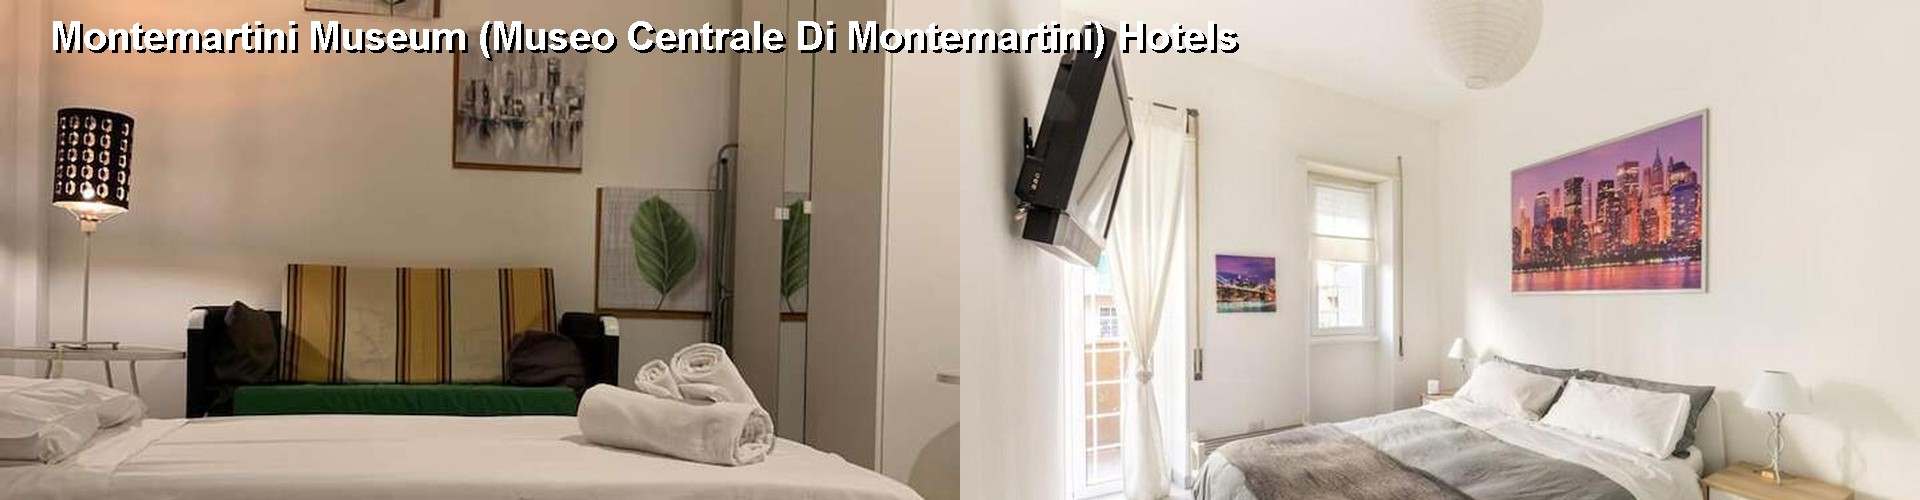 5 Best Hotels near Montemartini Museum (Museo Centrale Di Montemartini)